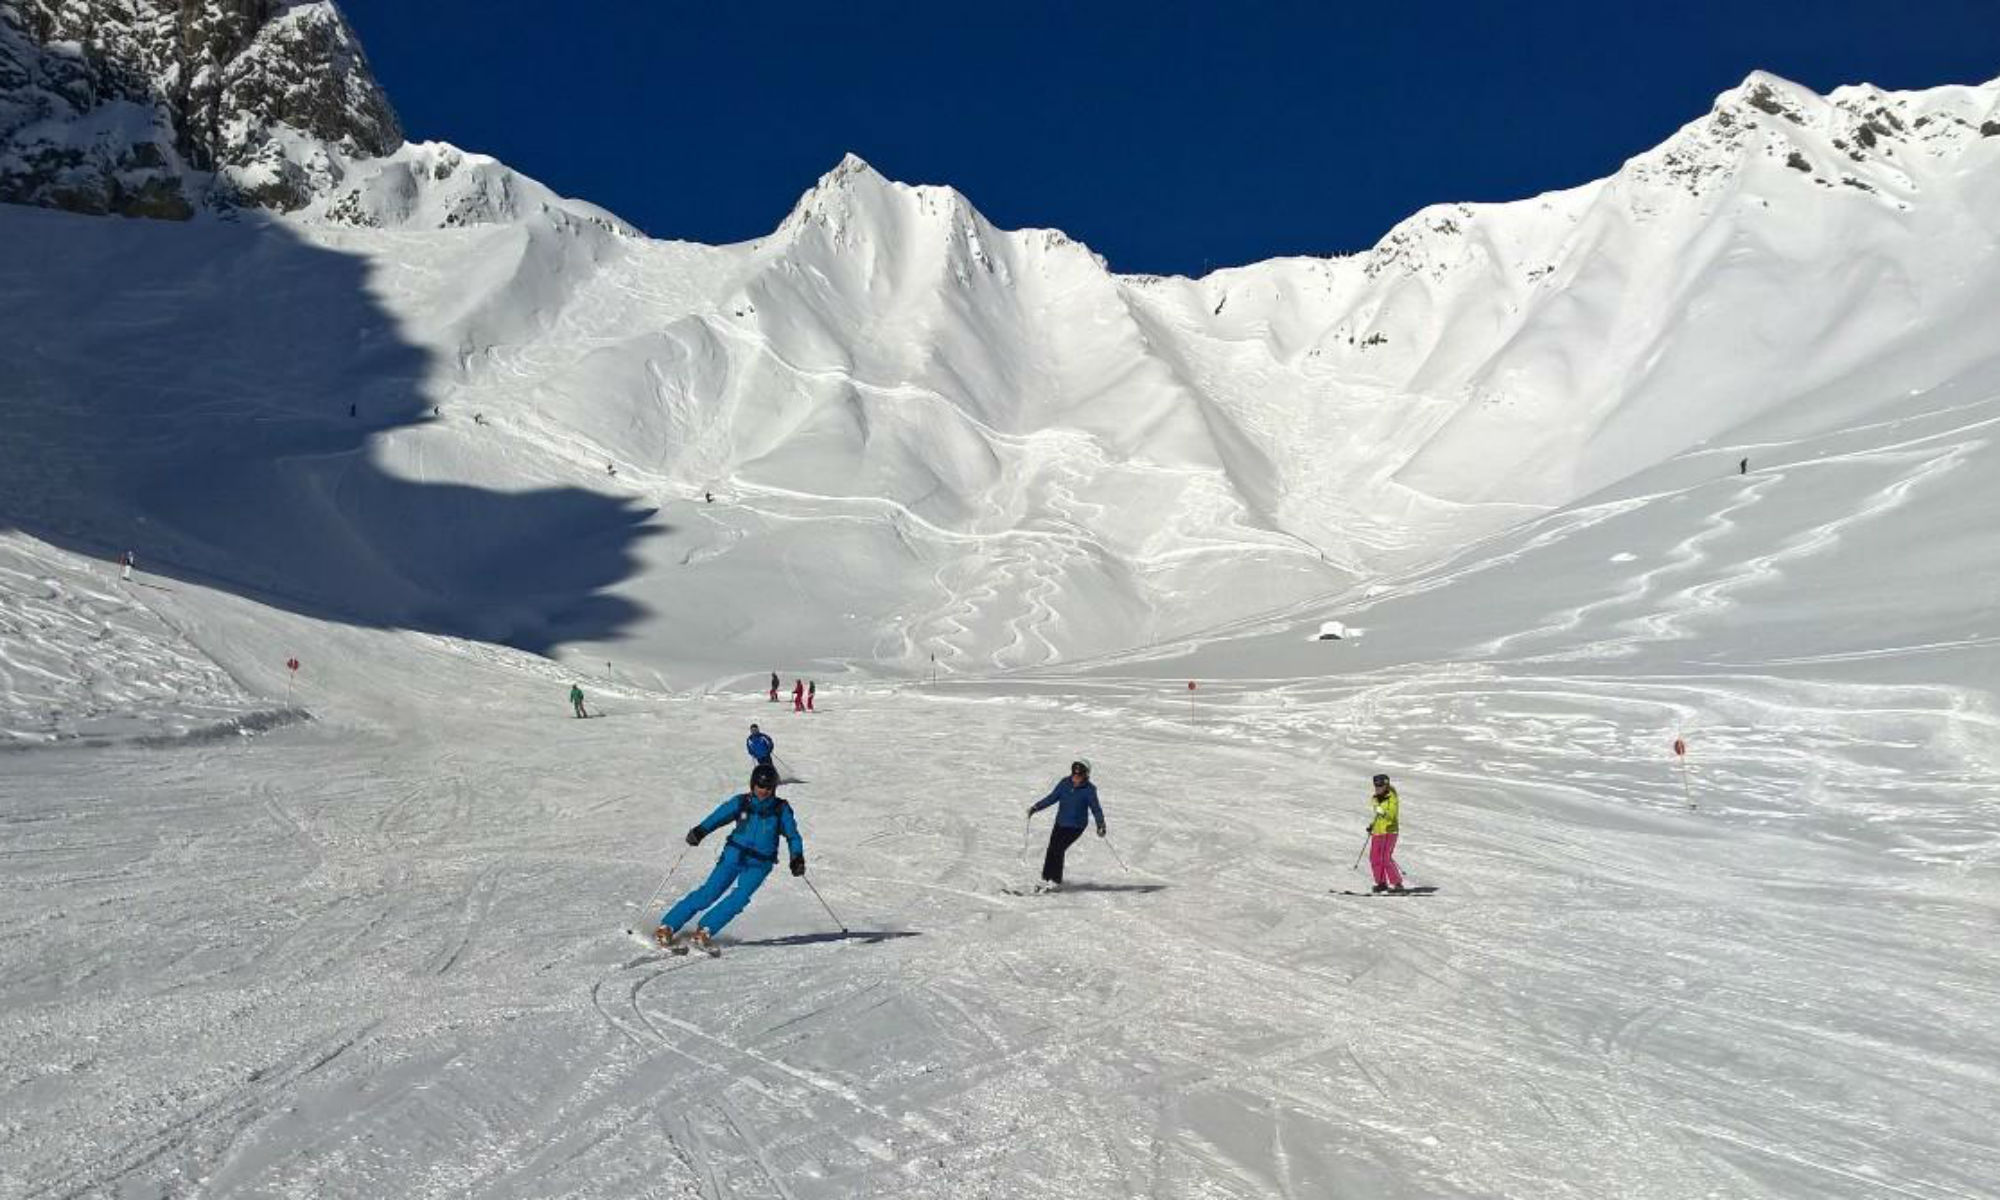 3 skiers on a beginner friendly slope in the ski resort of St Anton.